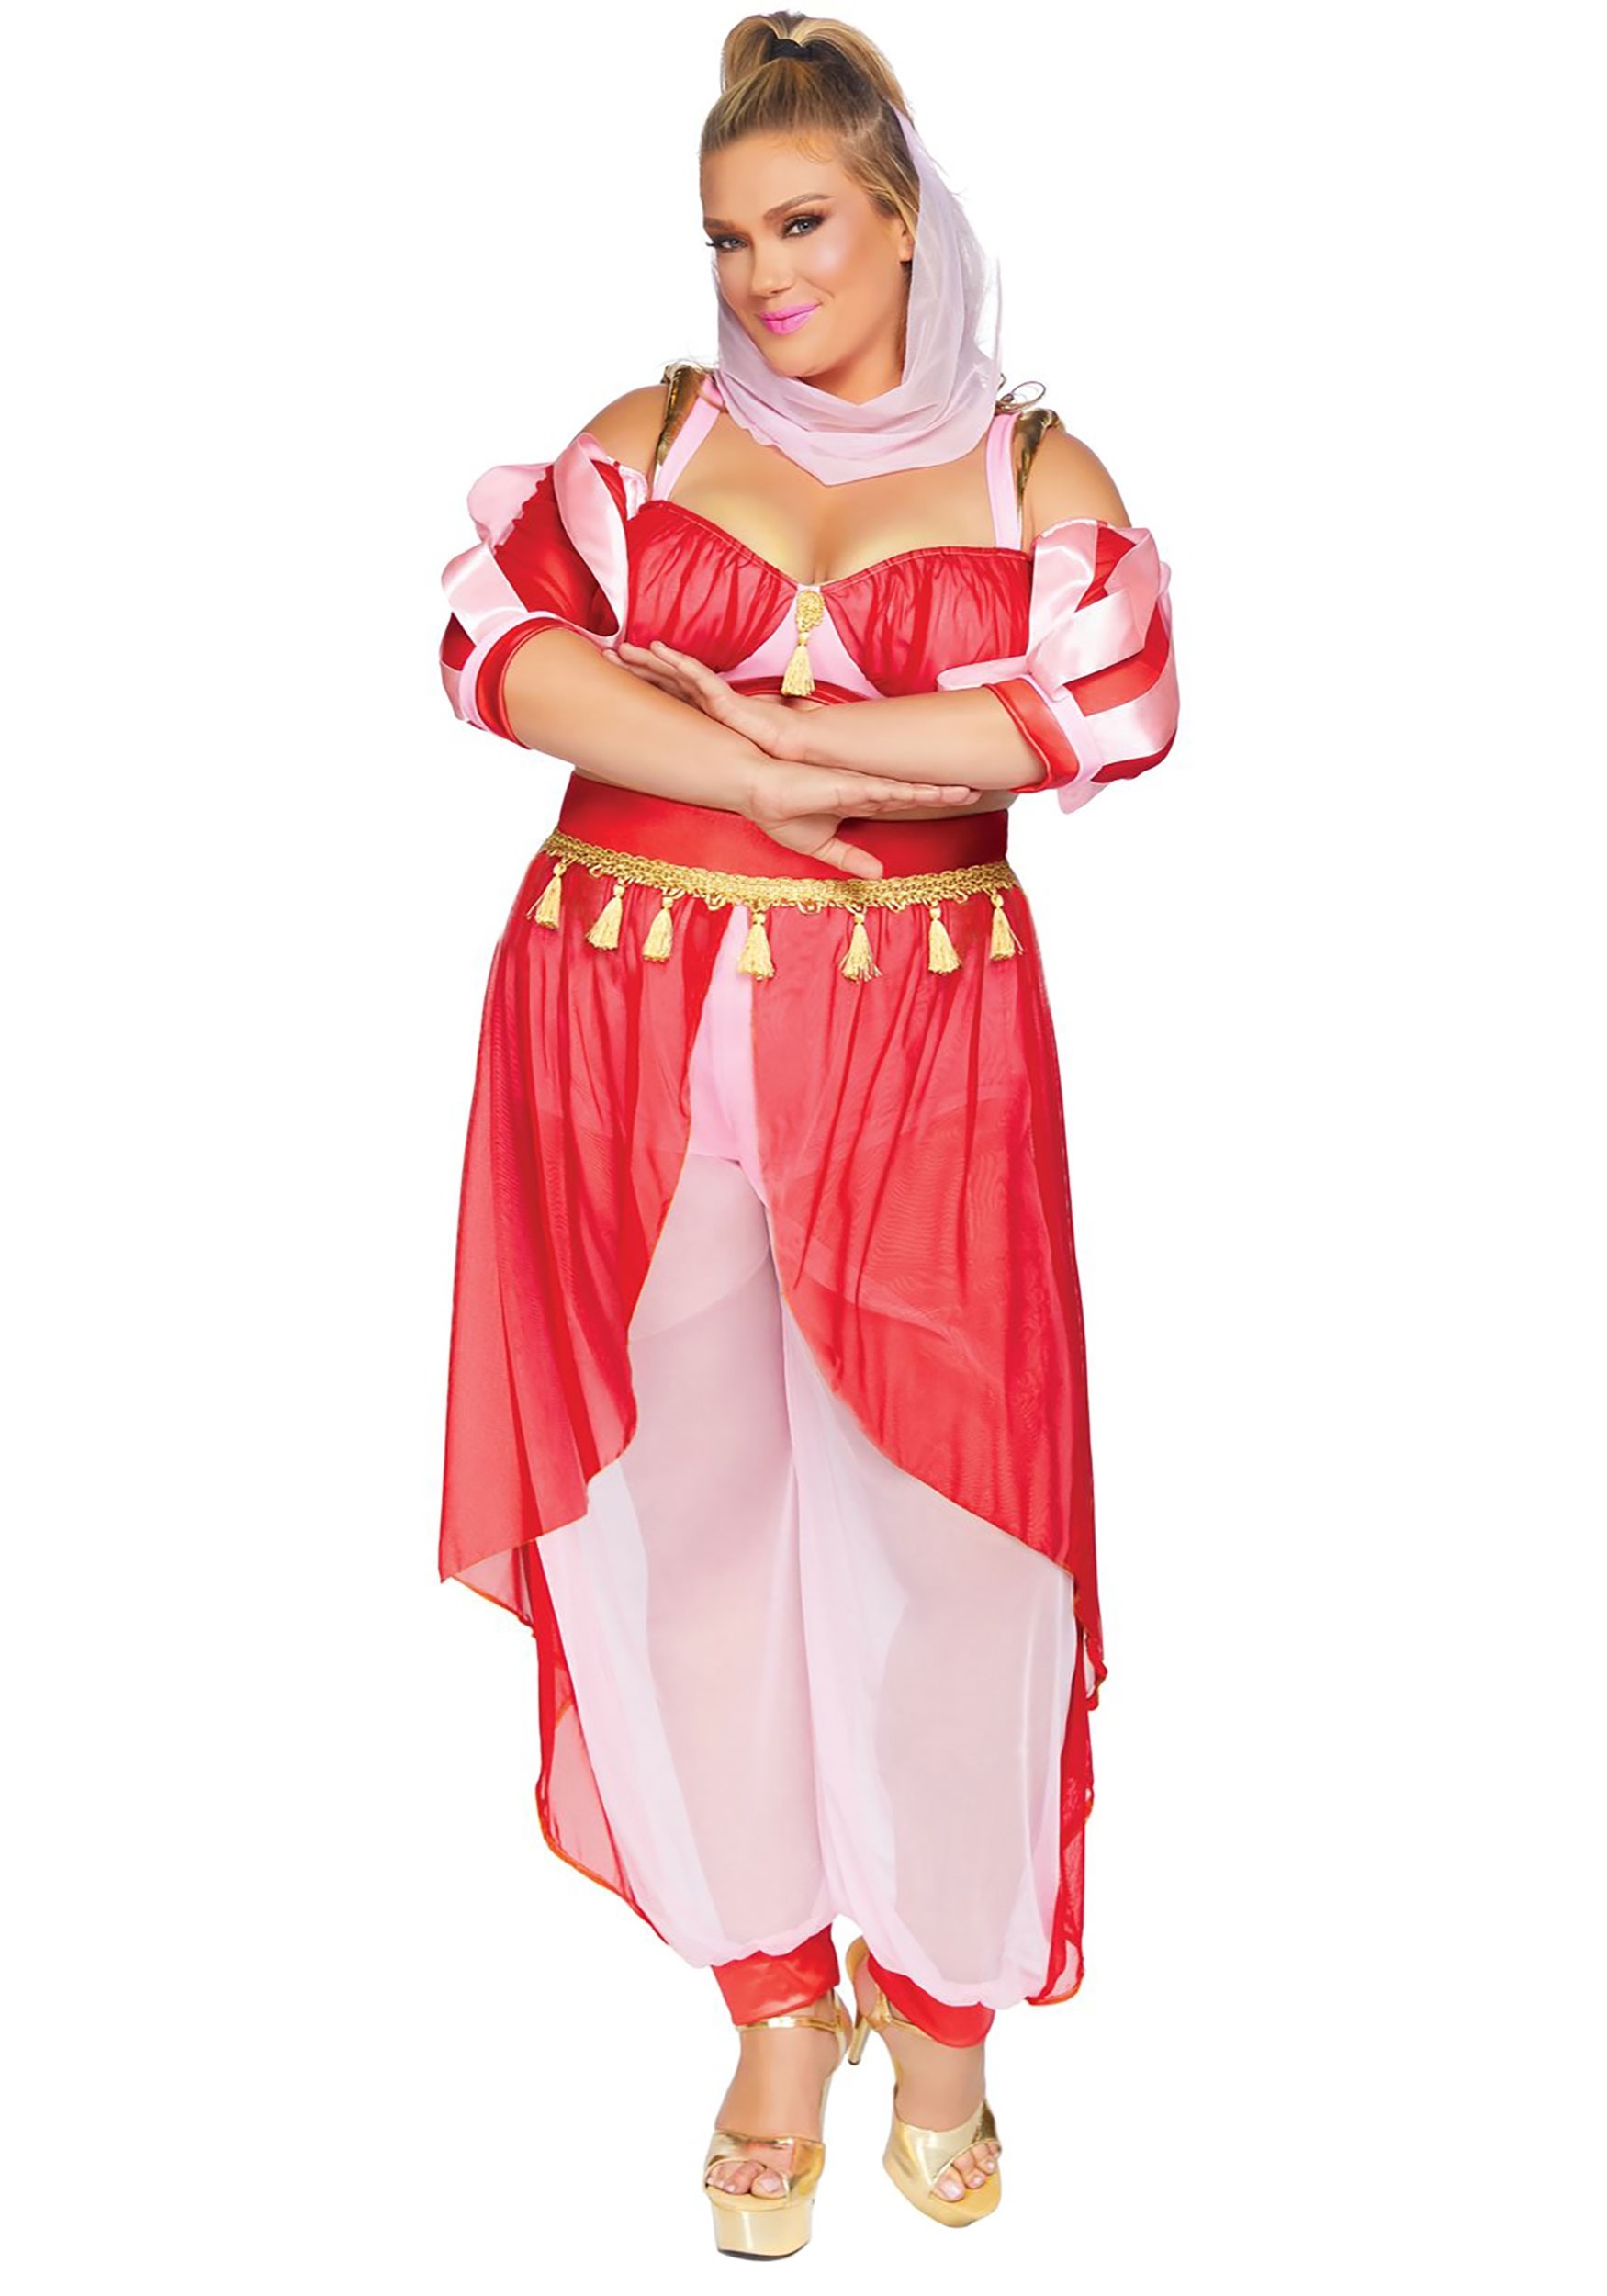 Photos - Fancy Dress MKW Leg Avenue Plus Size Women's Dreamy Genie Costume Pink/Orange LE86859X 